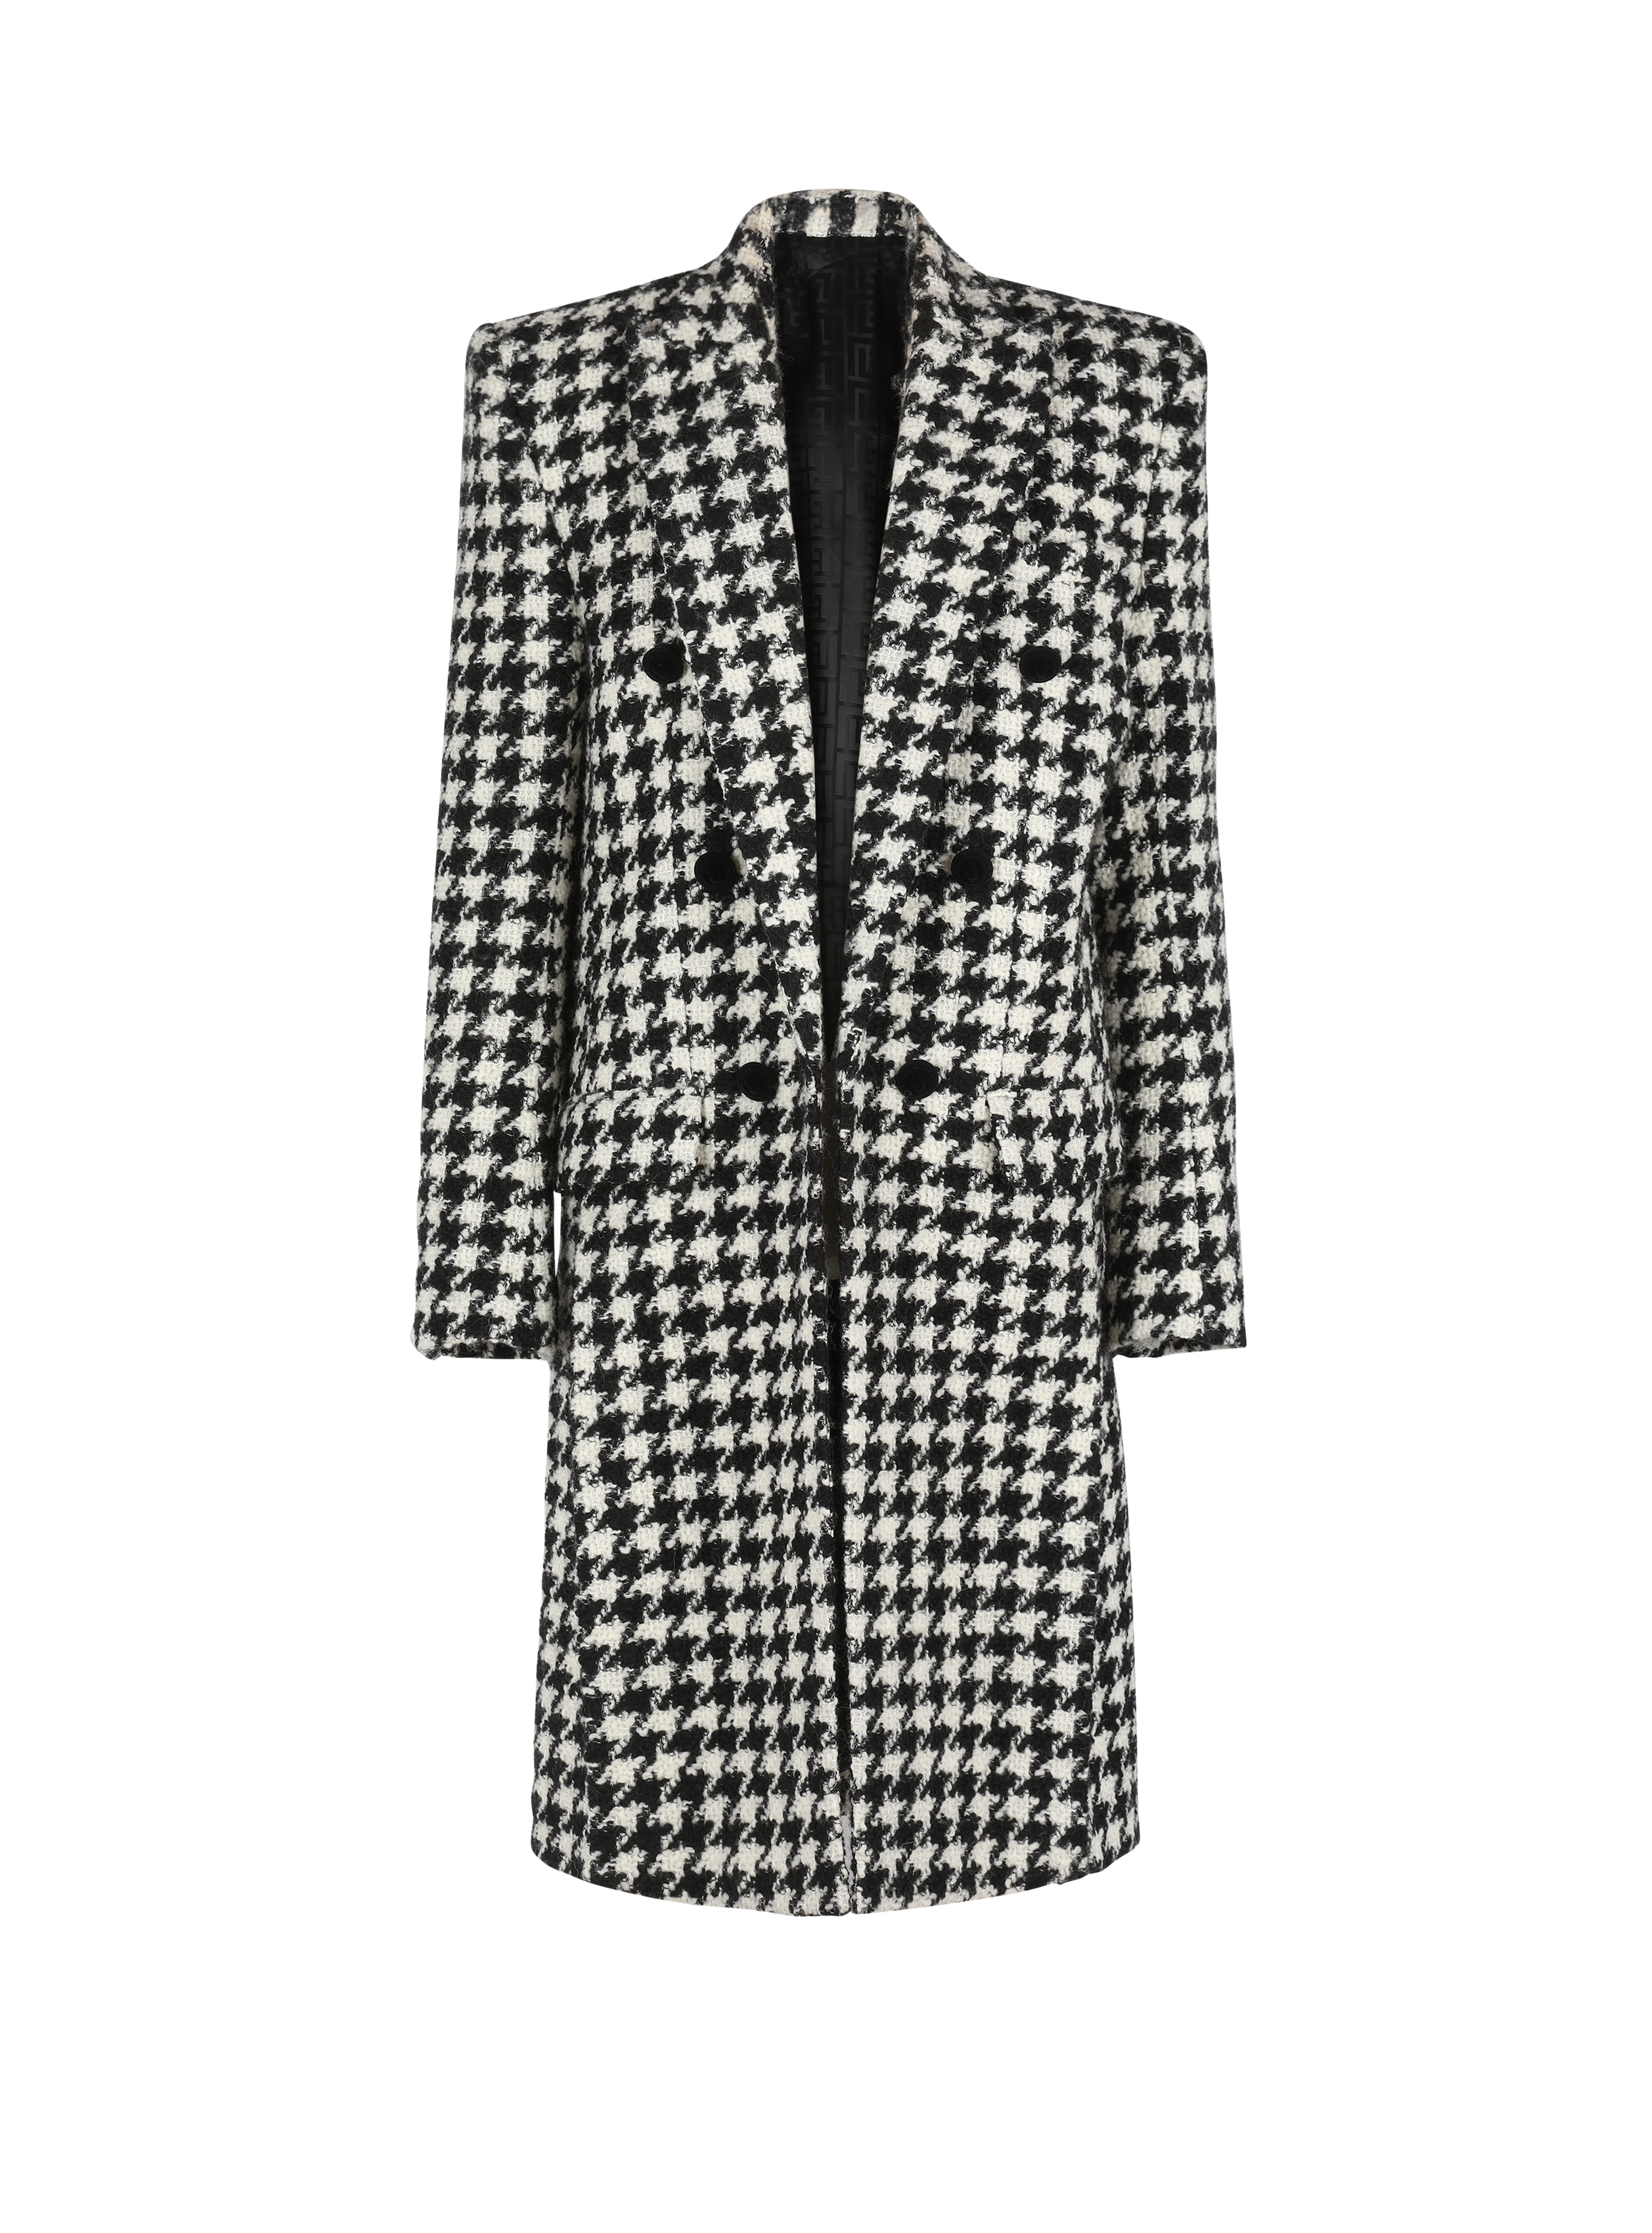 Unisex - Six-button wool coat with detachable inset jacket, black